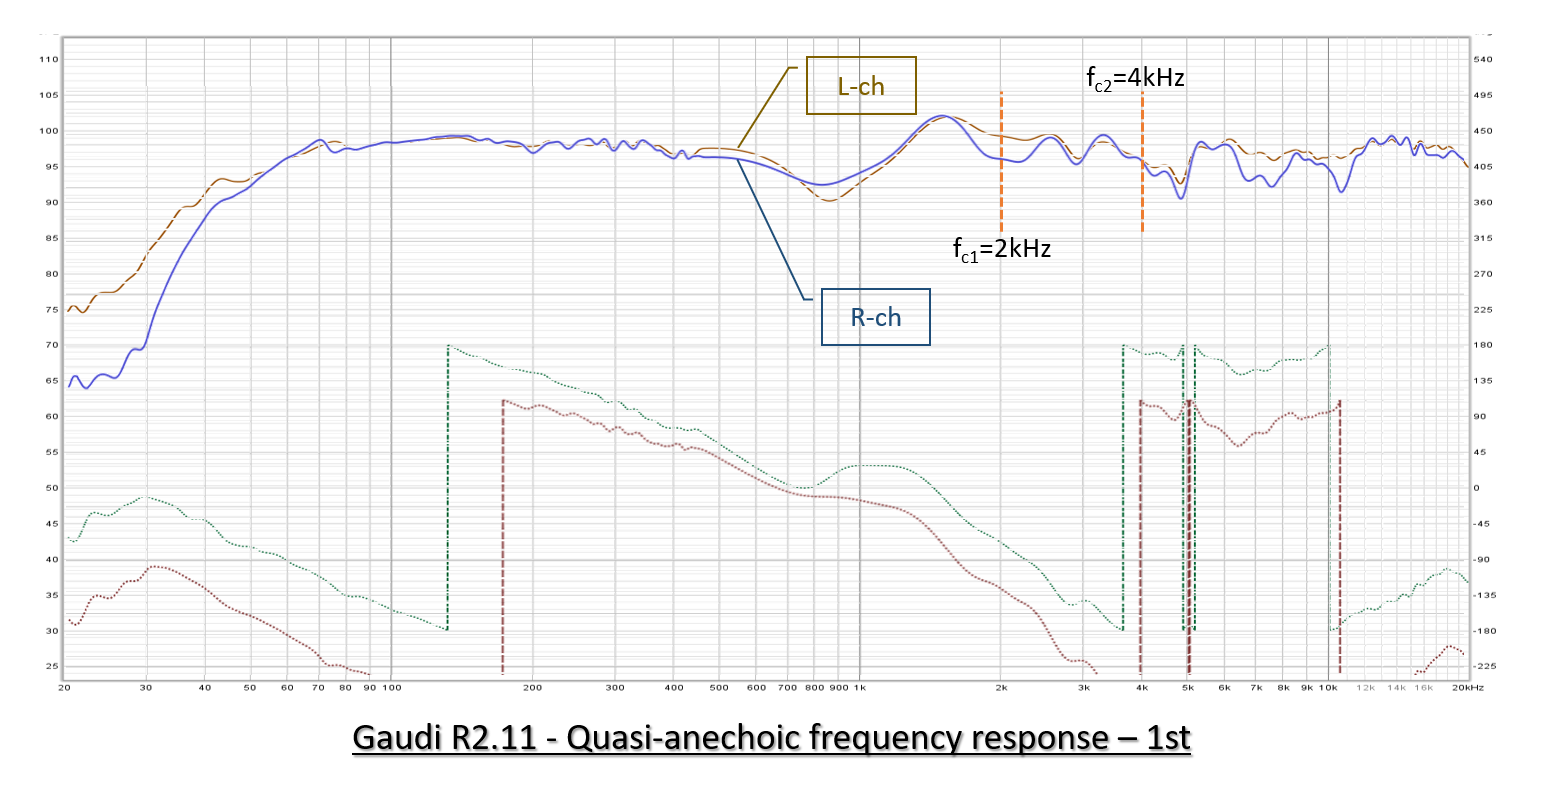 Quasi-anechoic frequency response of Gaudi R2.11 - 1st